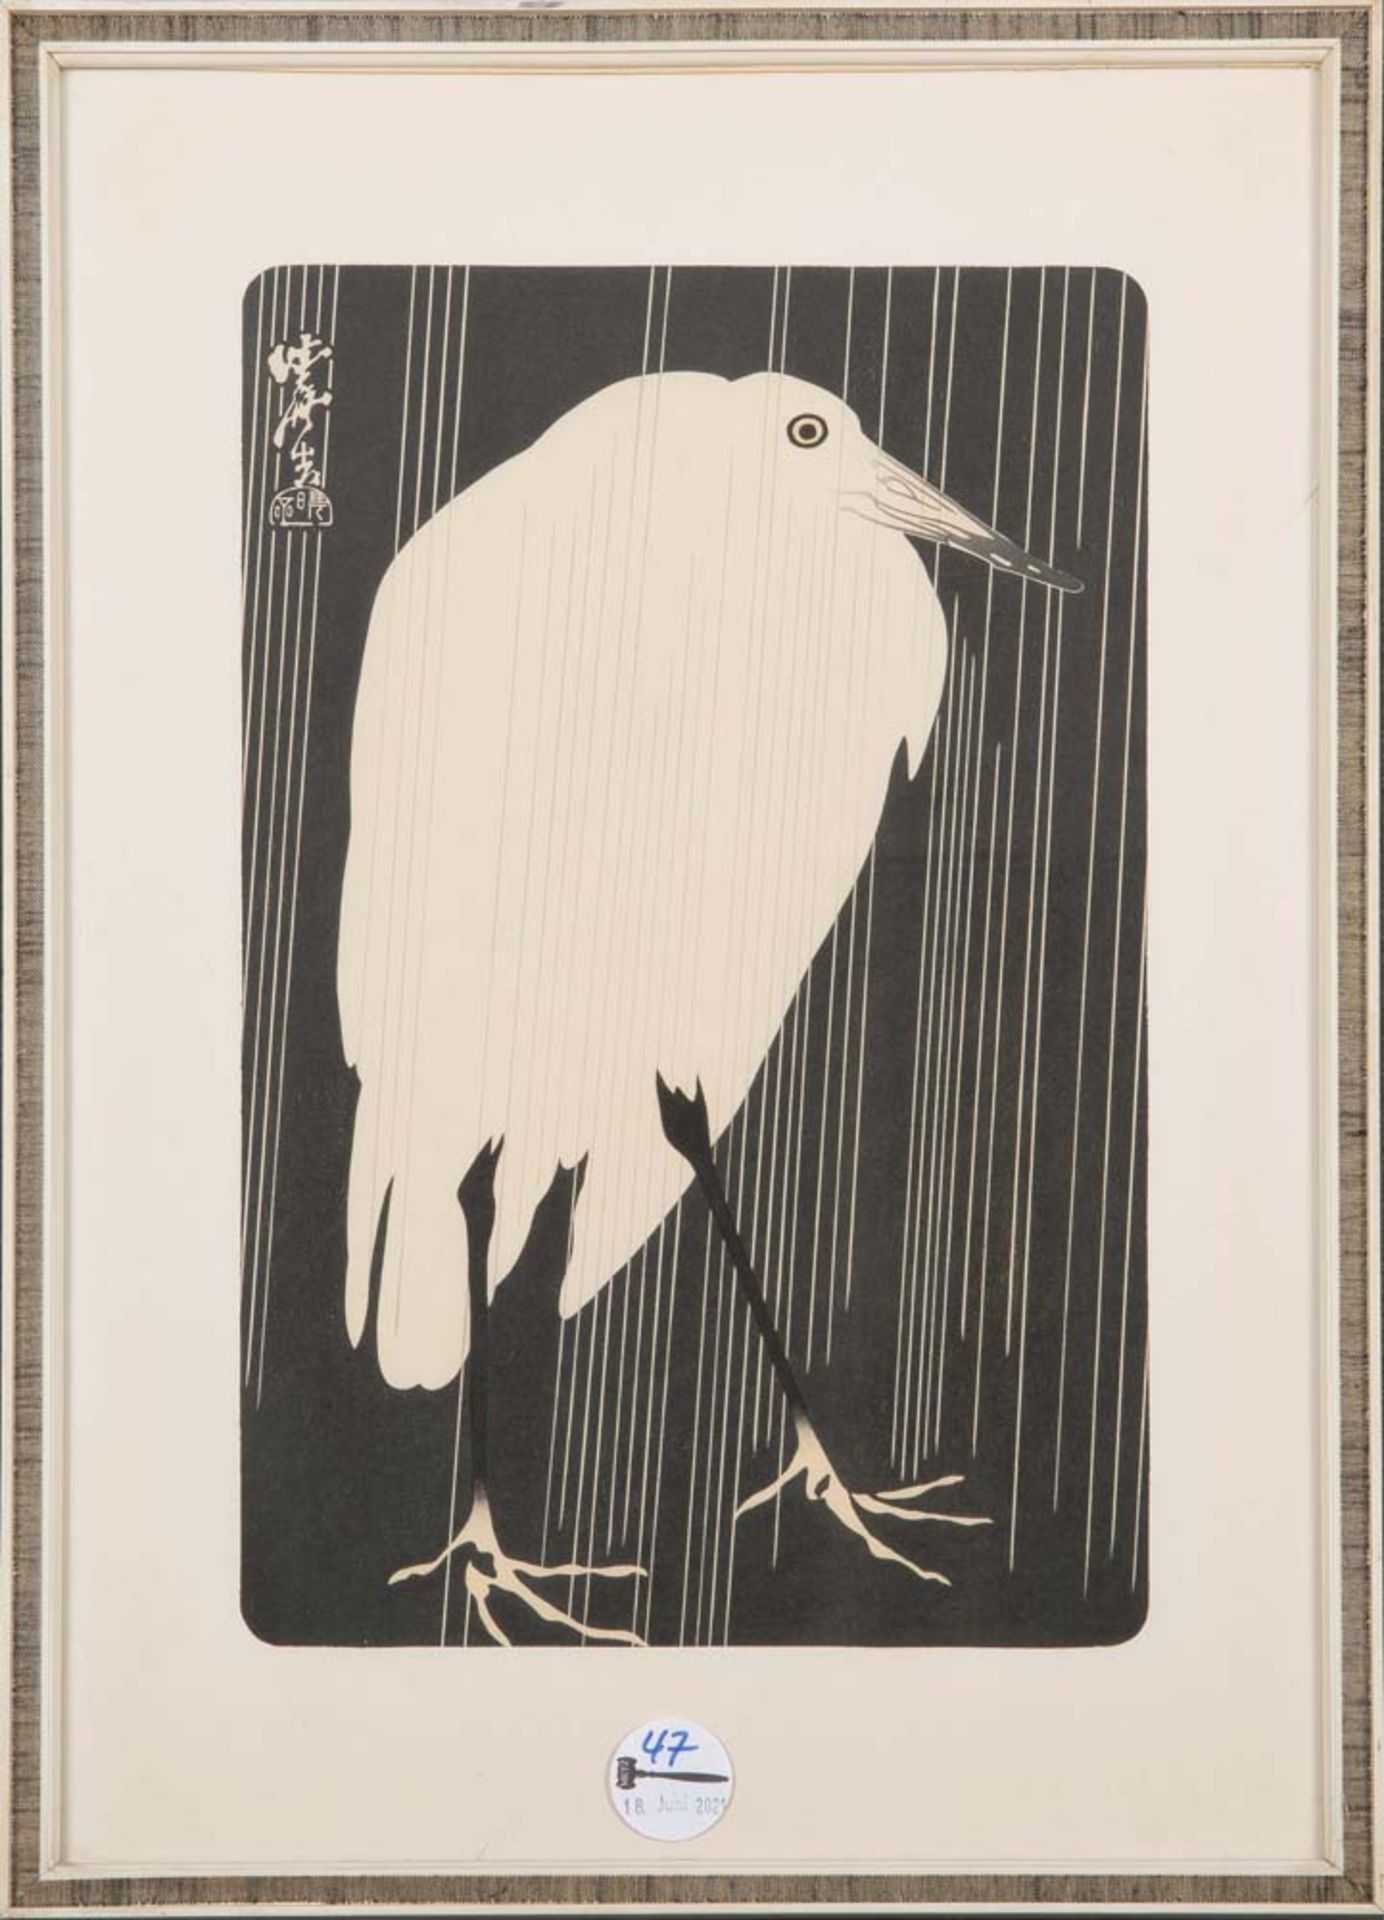 Asiatischer Künstler des 20. Jhs. Marabu. Holzschnitt, li./o./Schriftzeichen, hi./Gl./gerahmt, 35